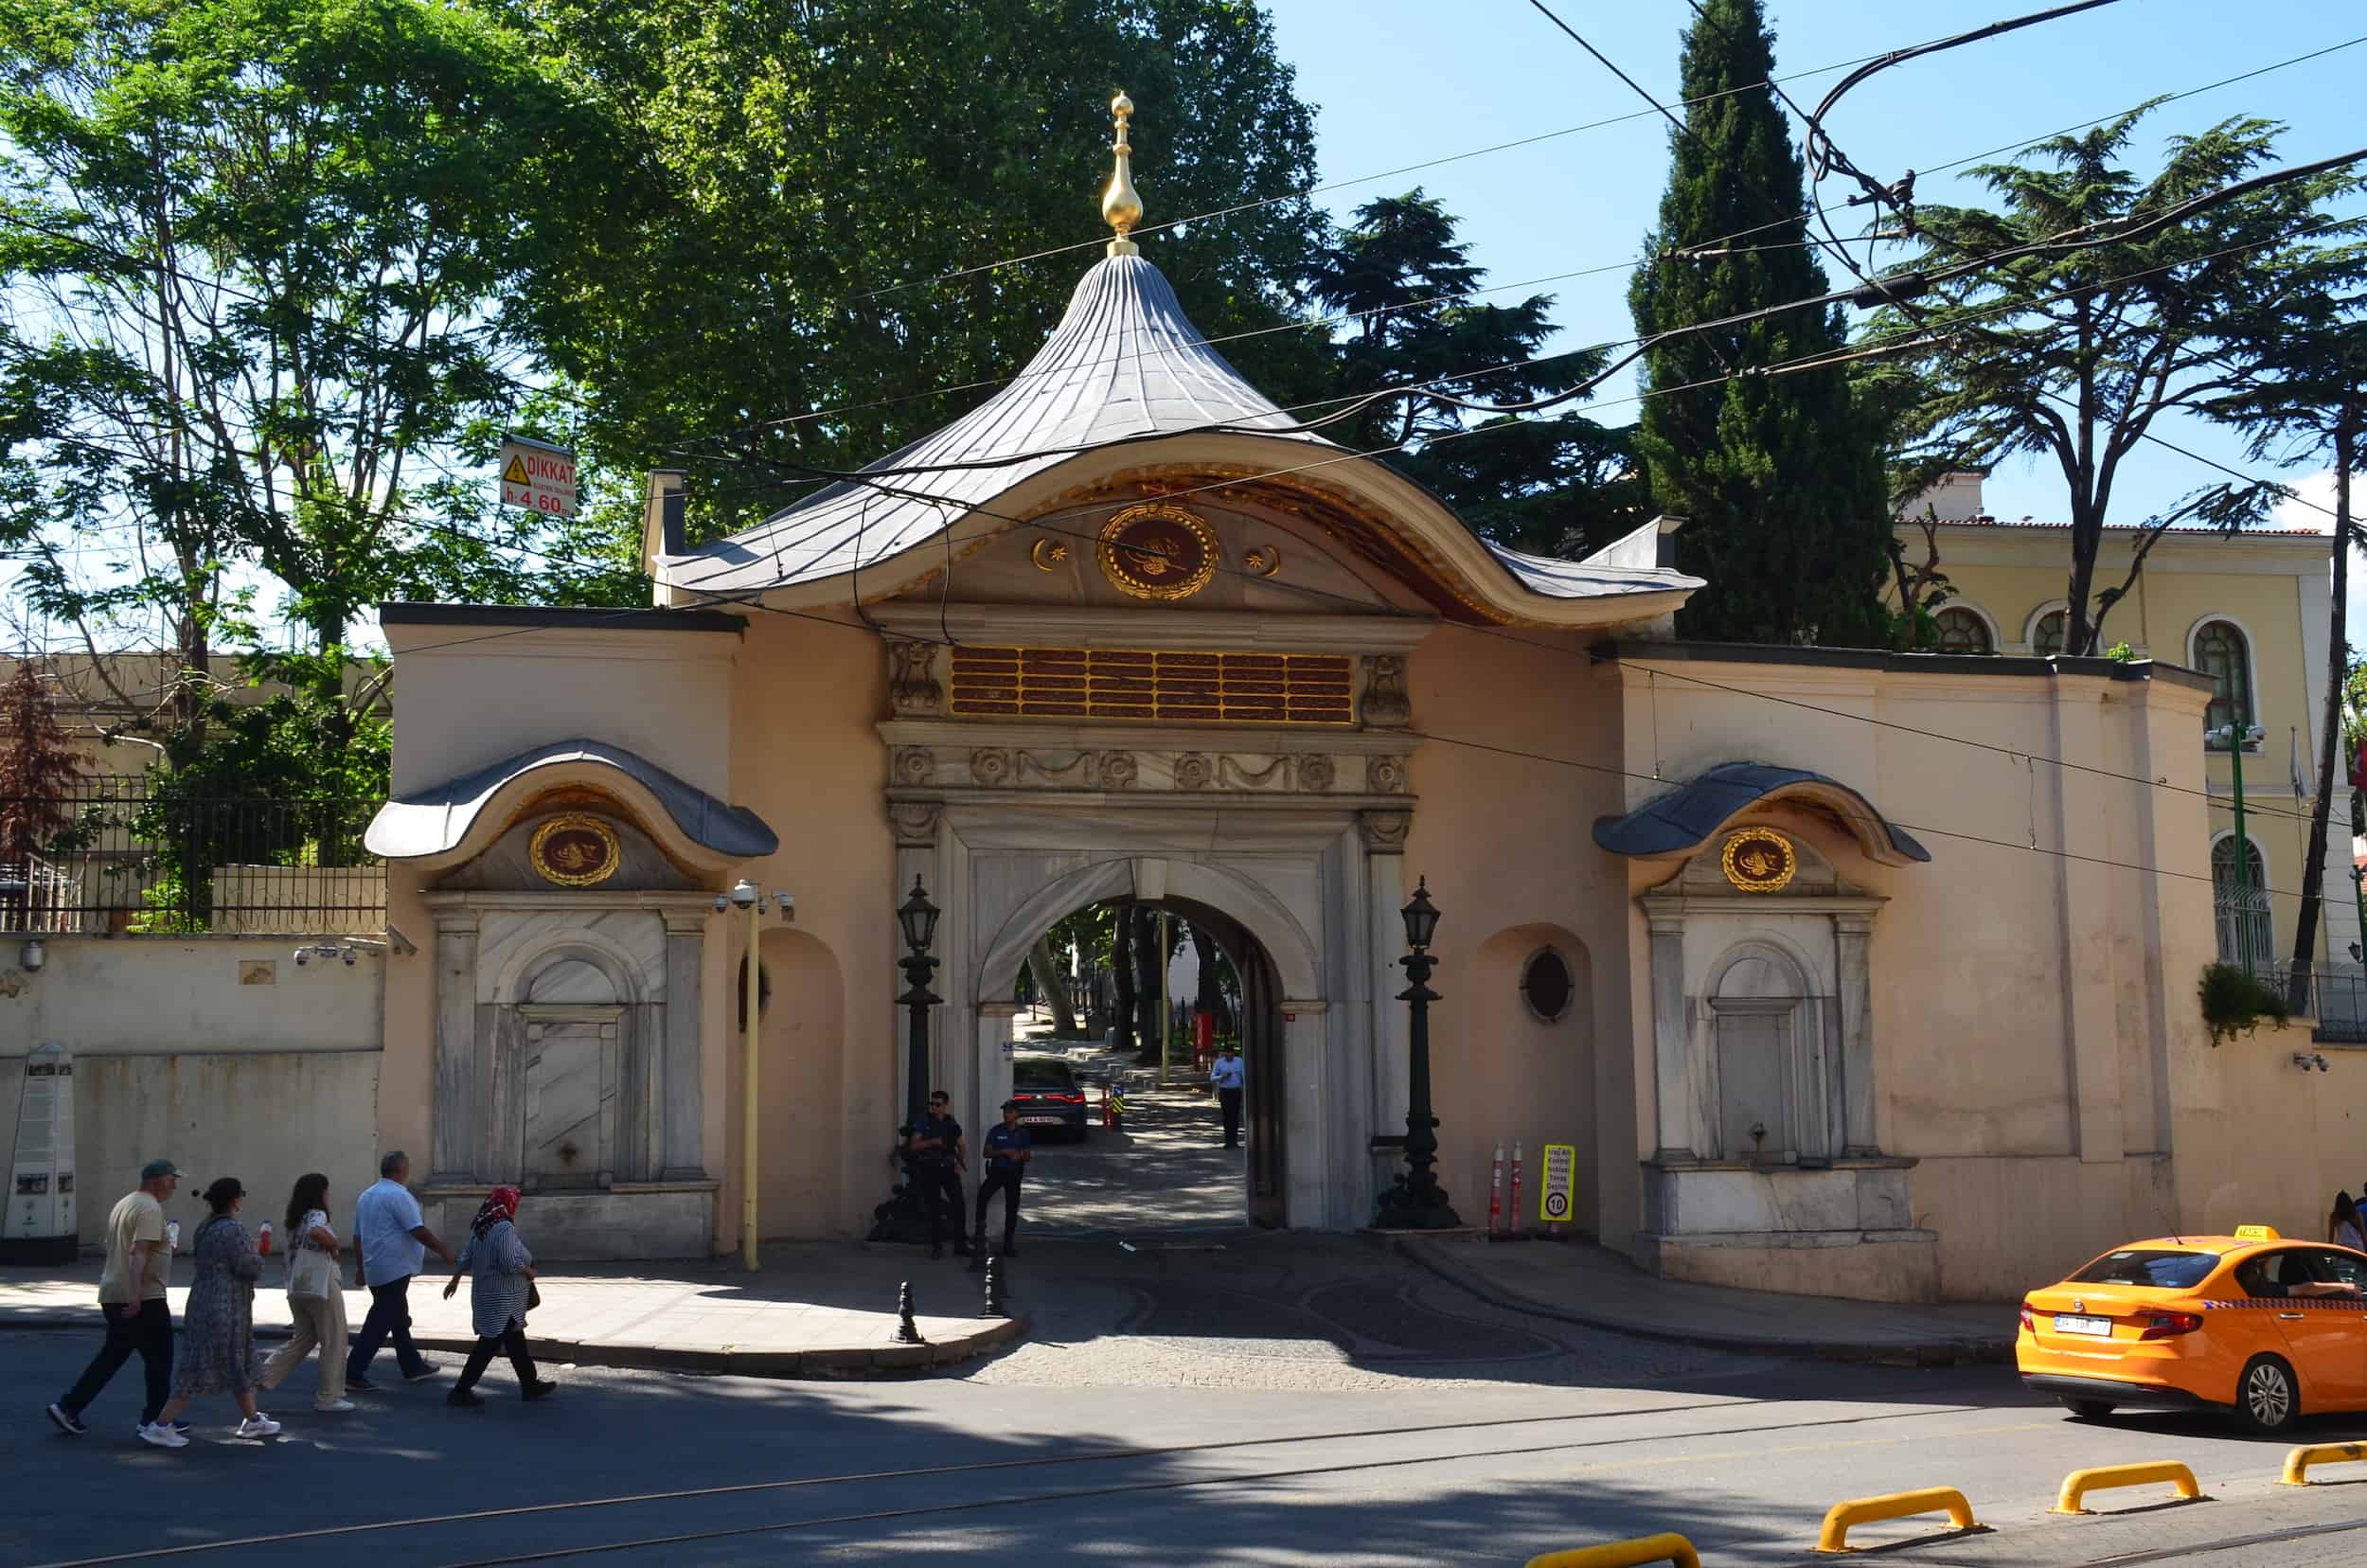 Sublime Porte in Istanbul, Turkey